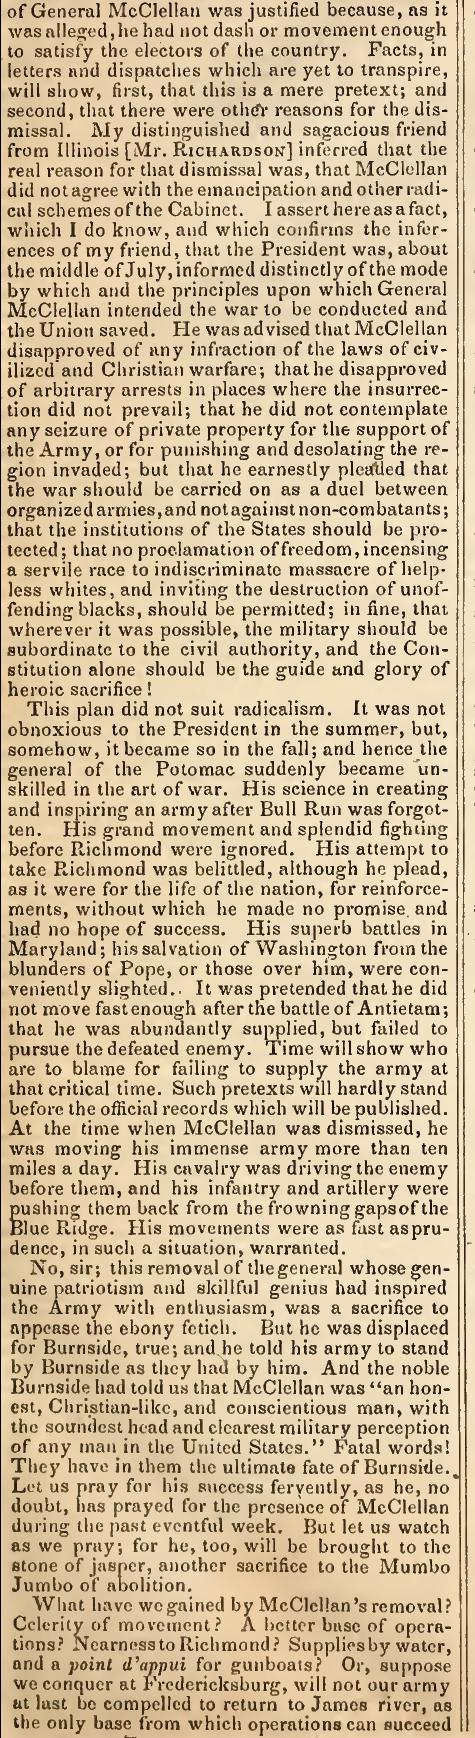 Democratic House member Samuel Cox of Ohio criticizes President Lincoln's dismissal of General McClellan  Congressional Globe December 18, 1862